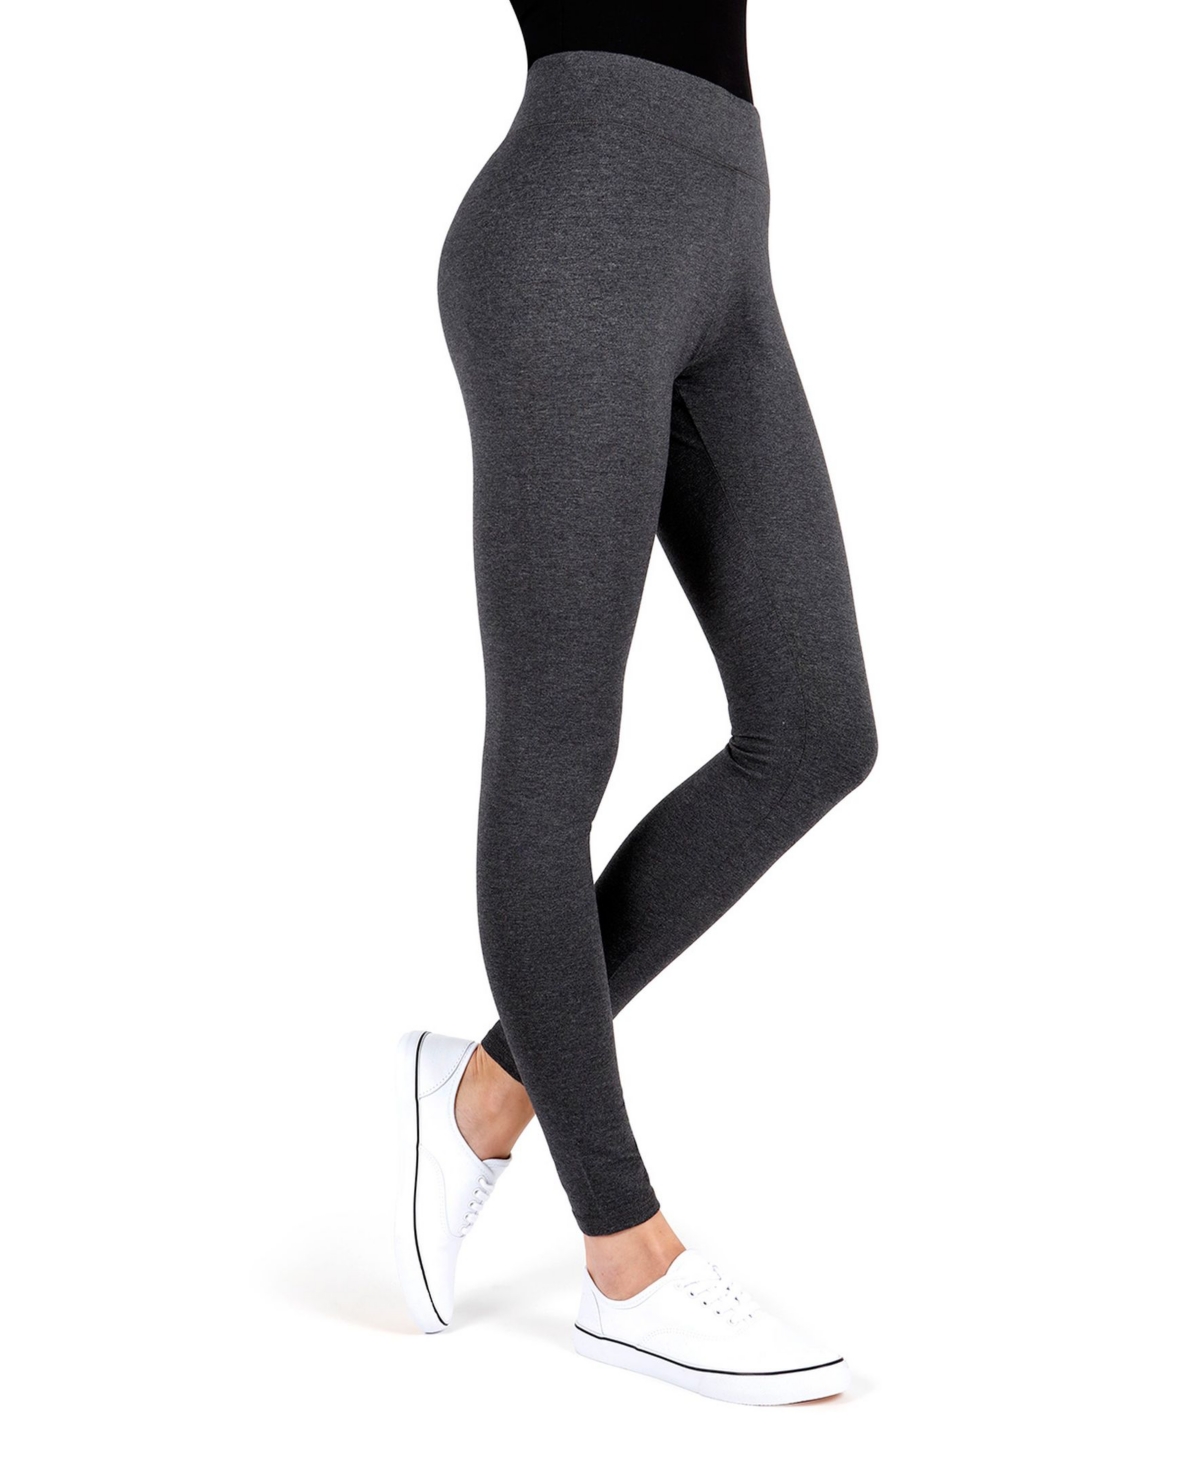 Women's Basic Cotton Leggings - Gray Heather